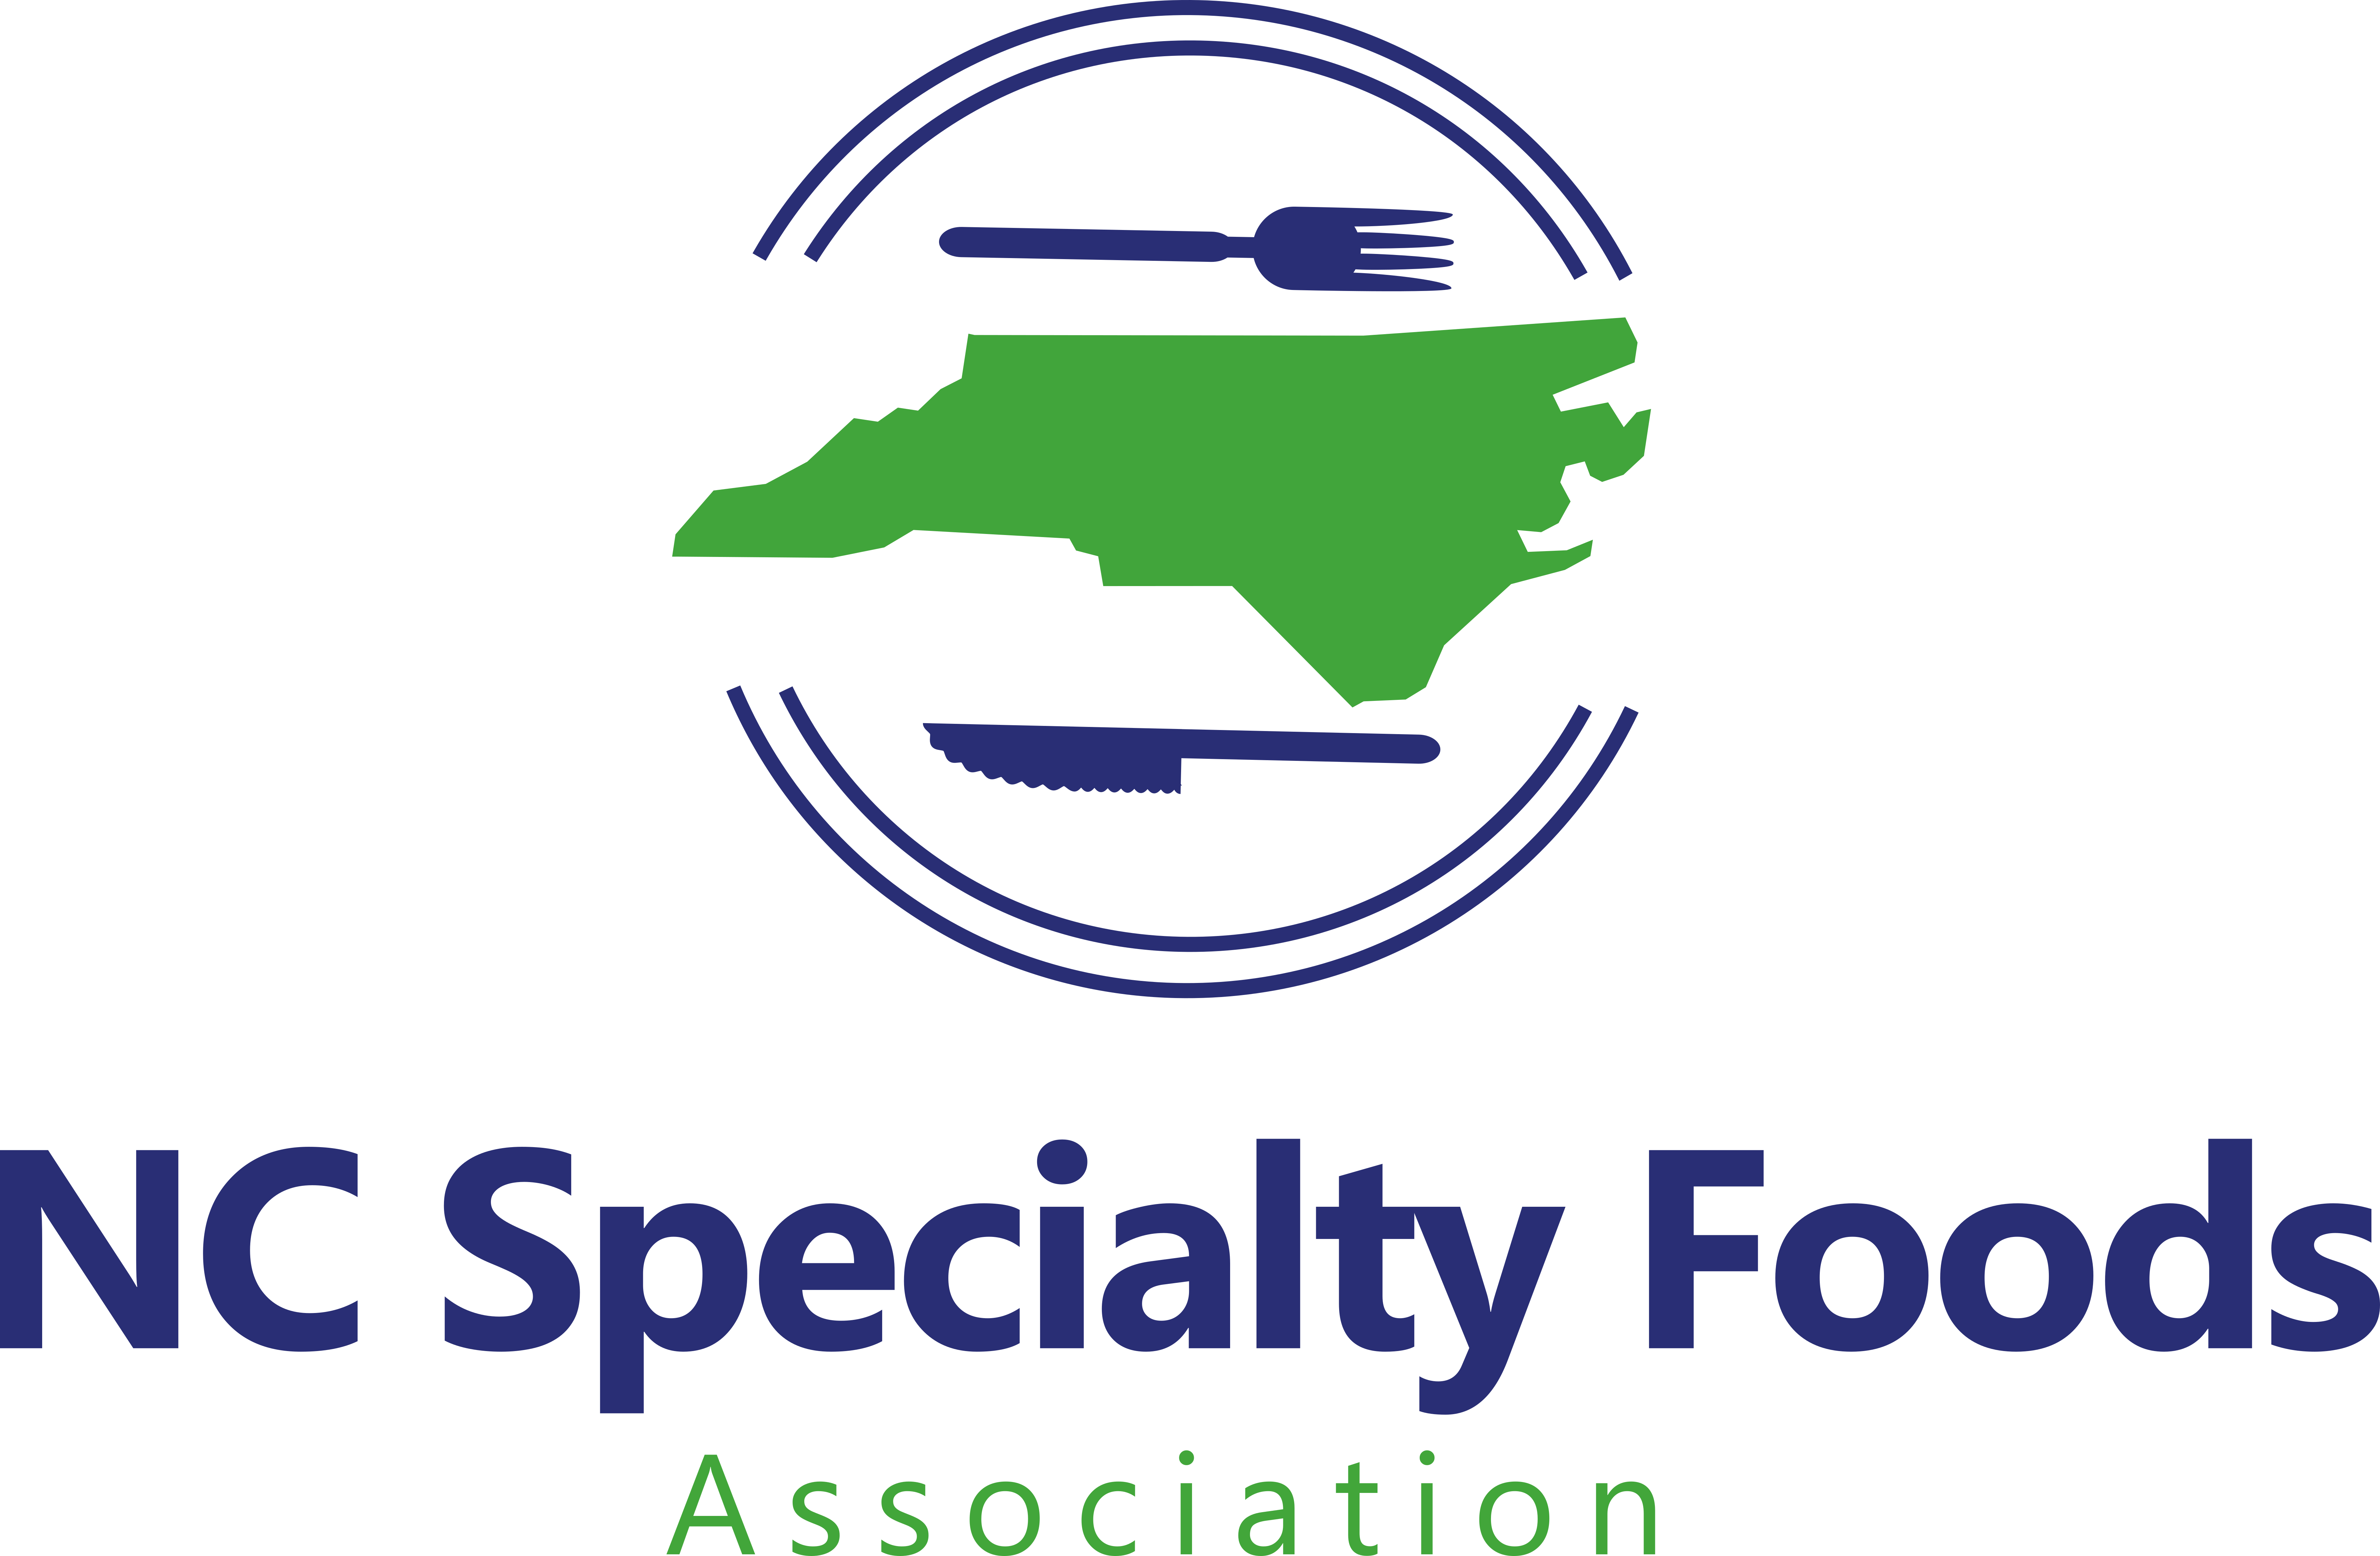 NC Specialty Foods Association logo